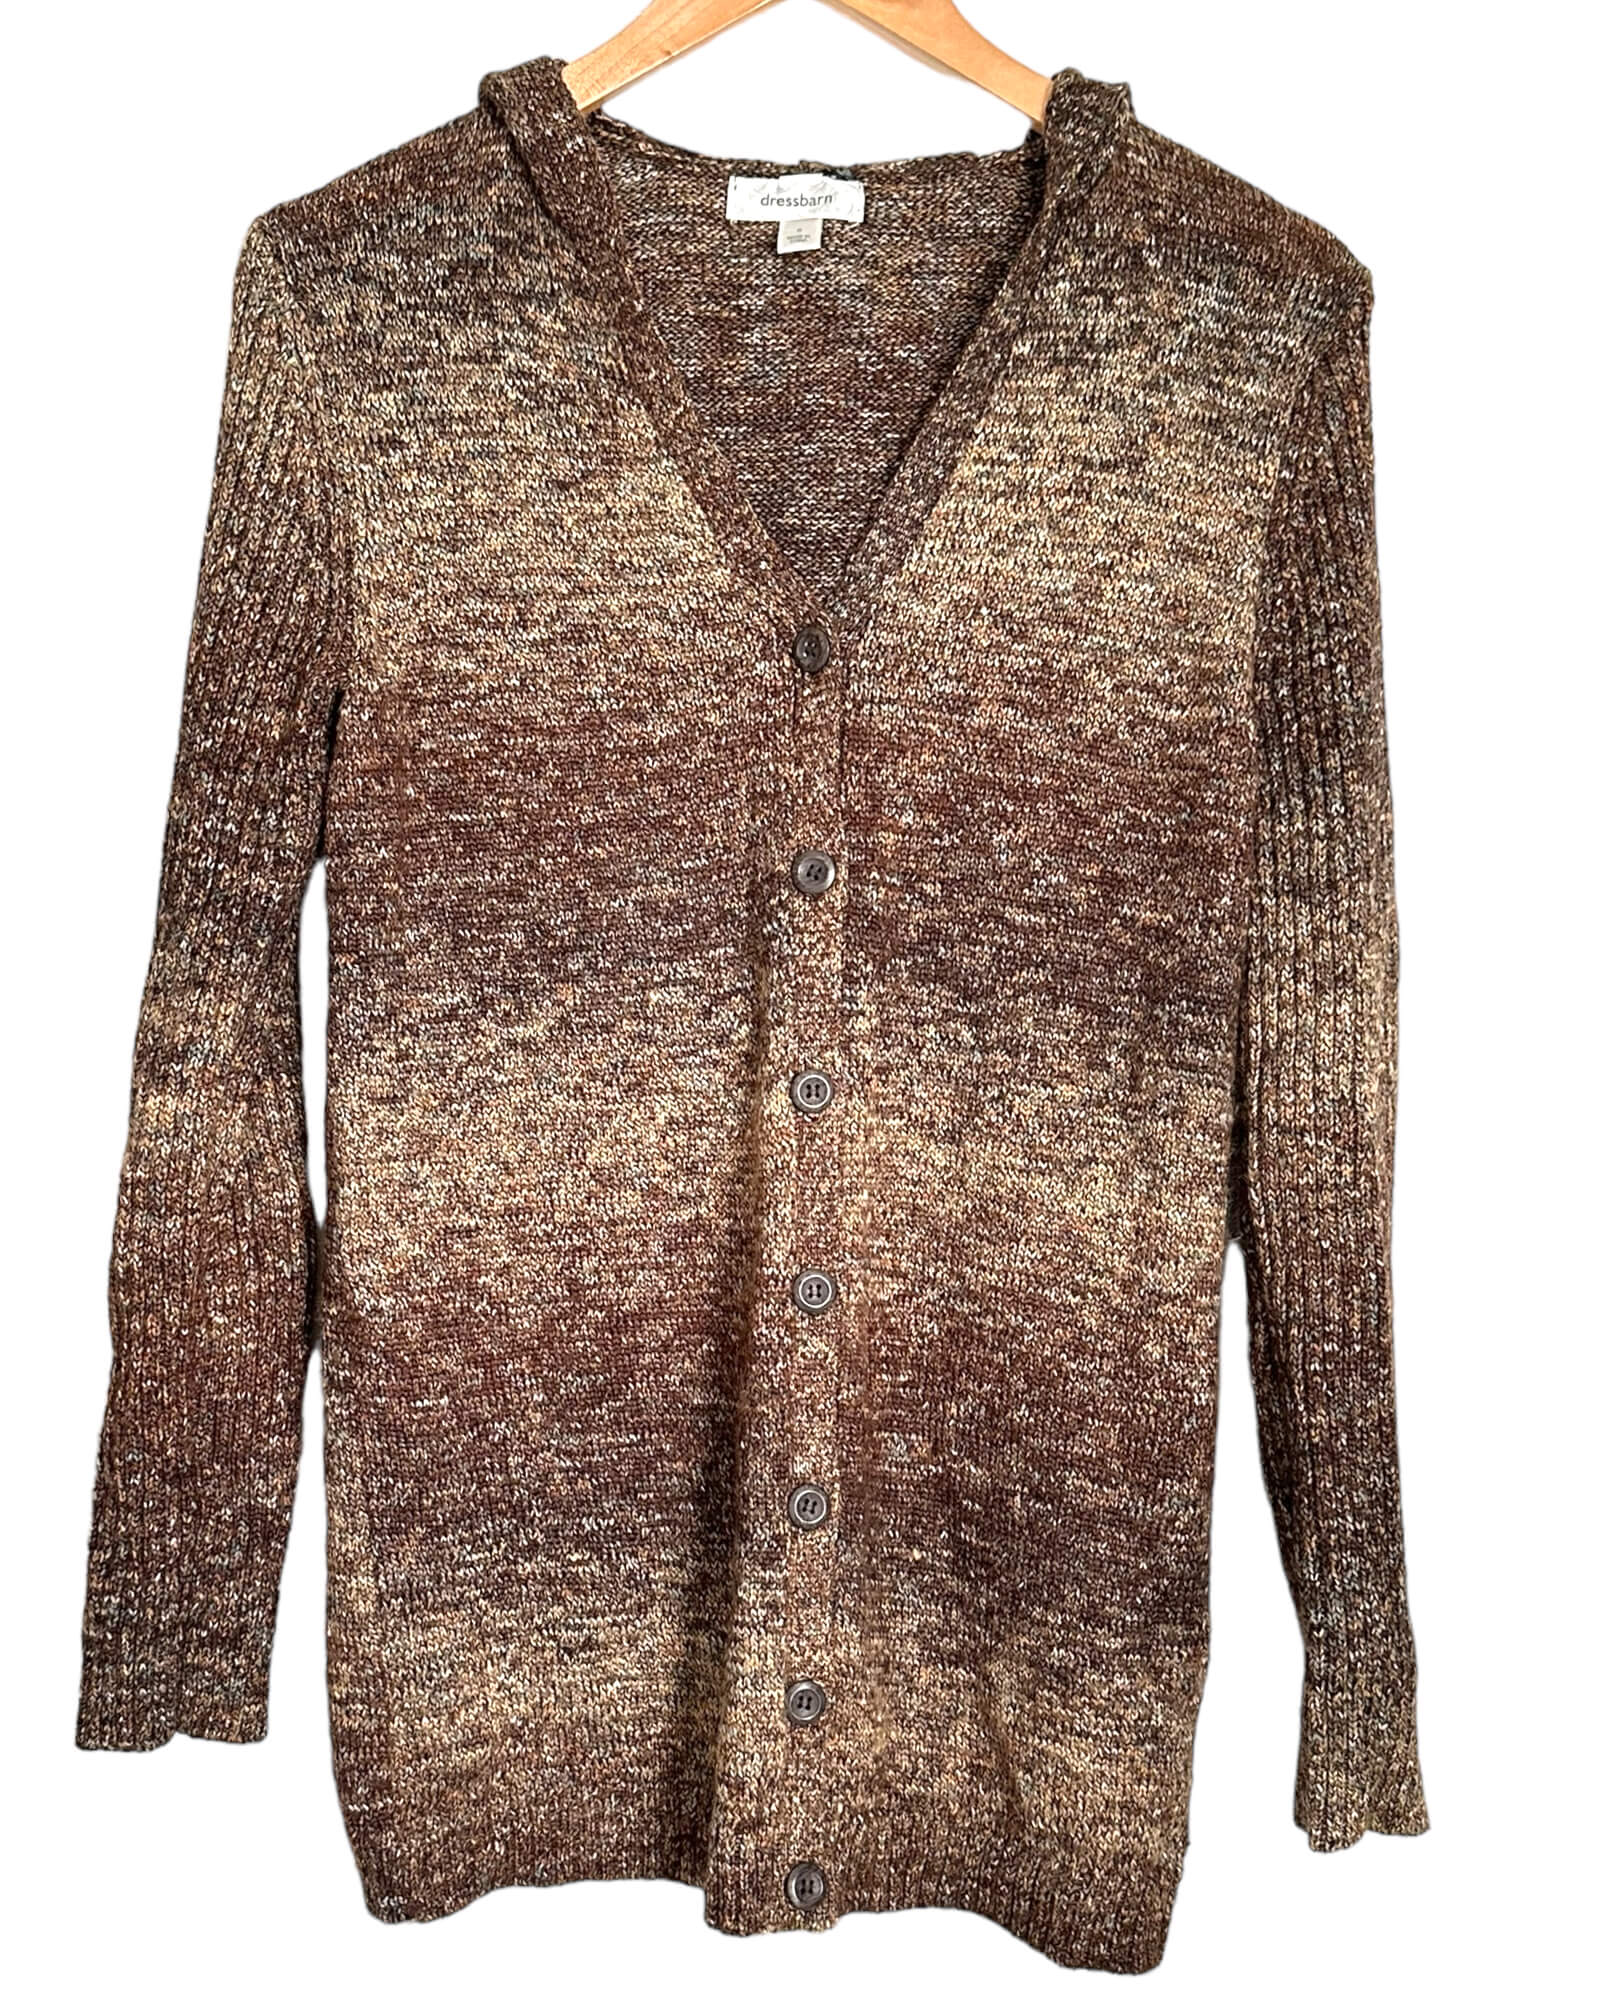 Soft Autumn DRESS BARN brown marle hooded cardigan sweater